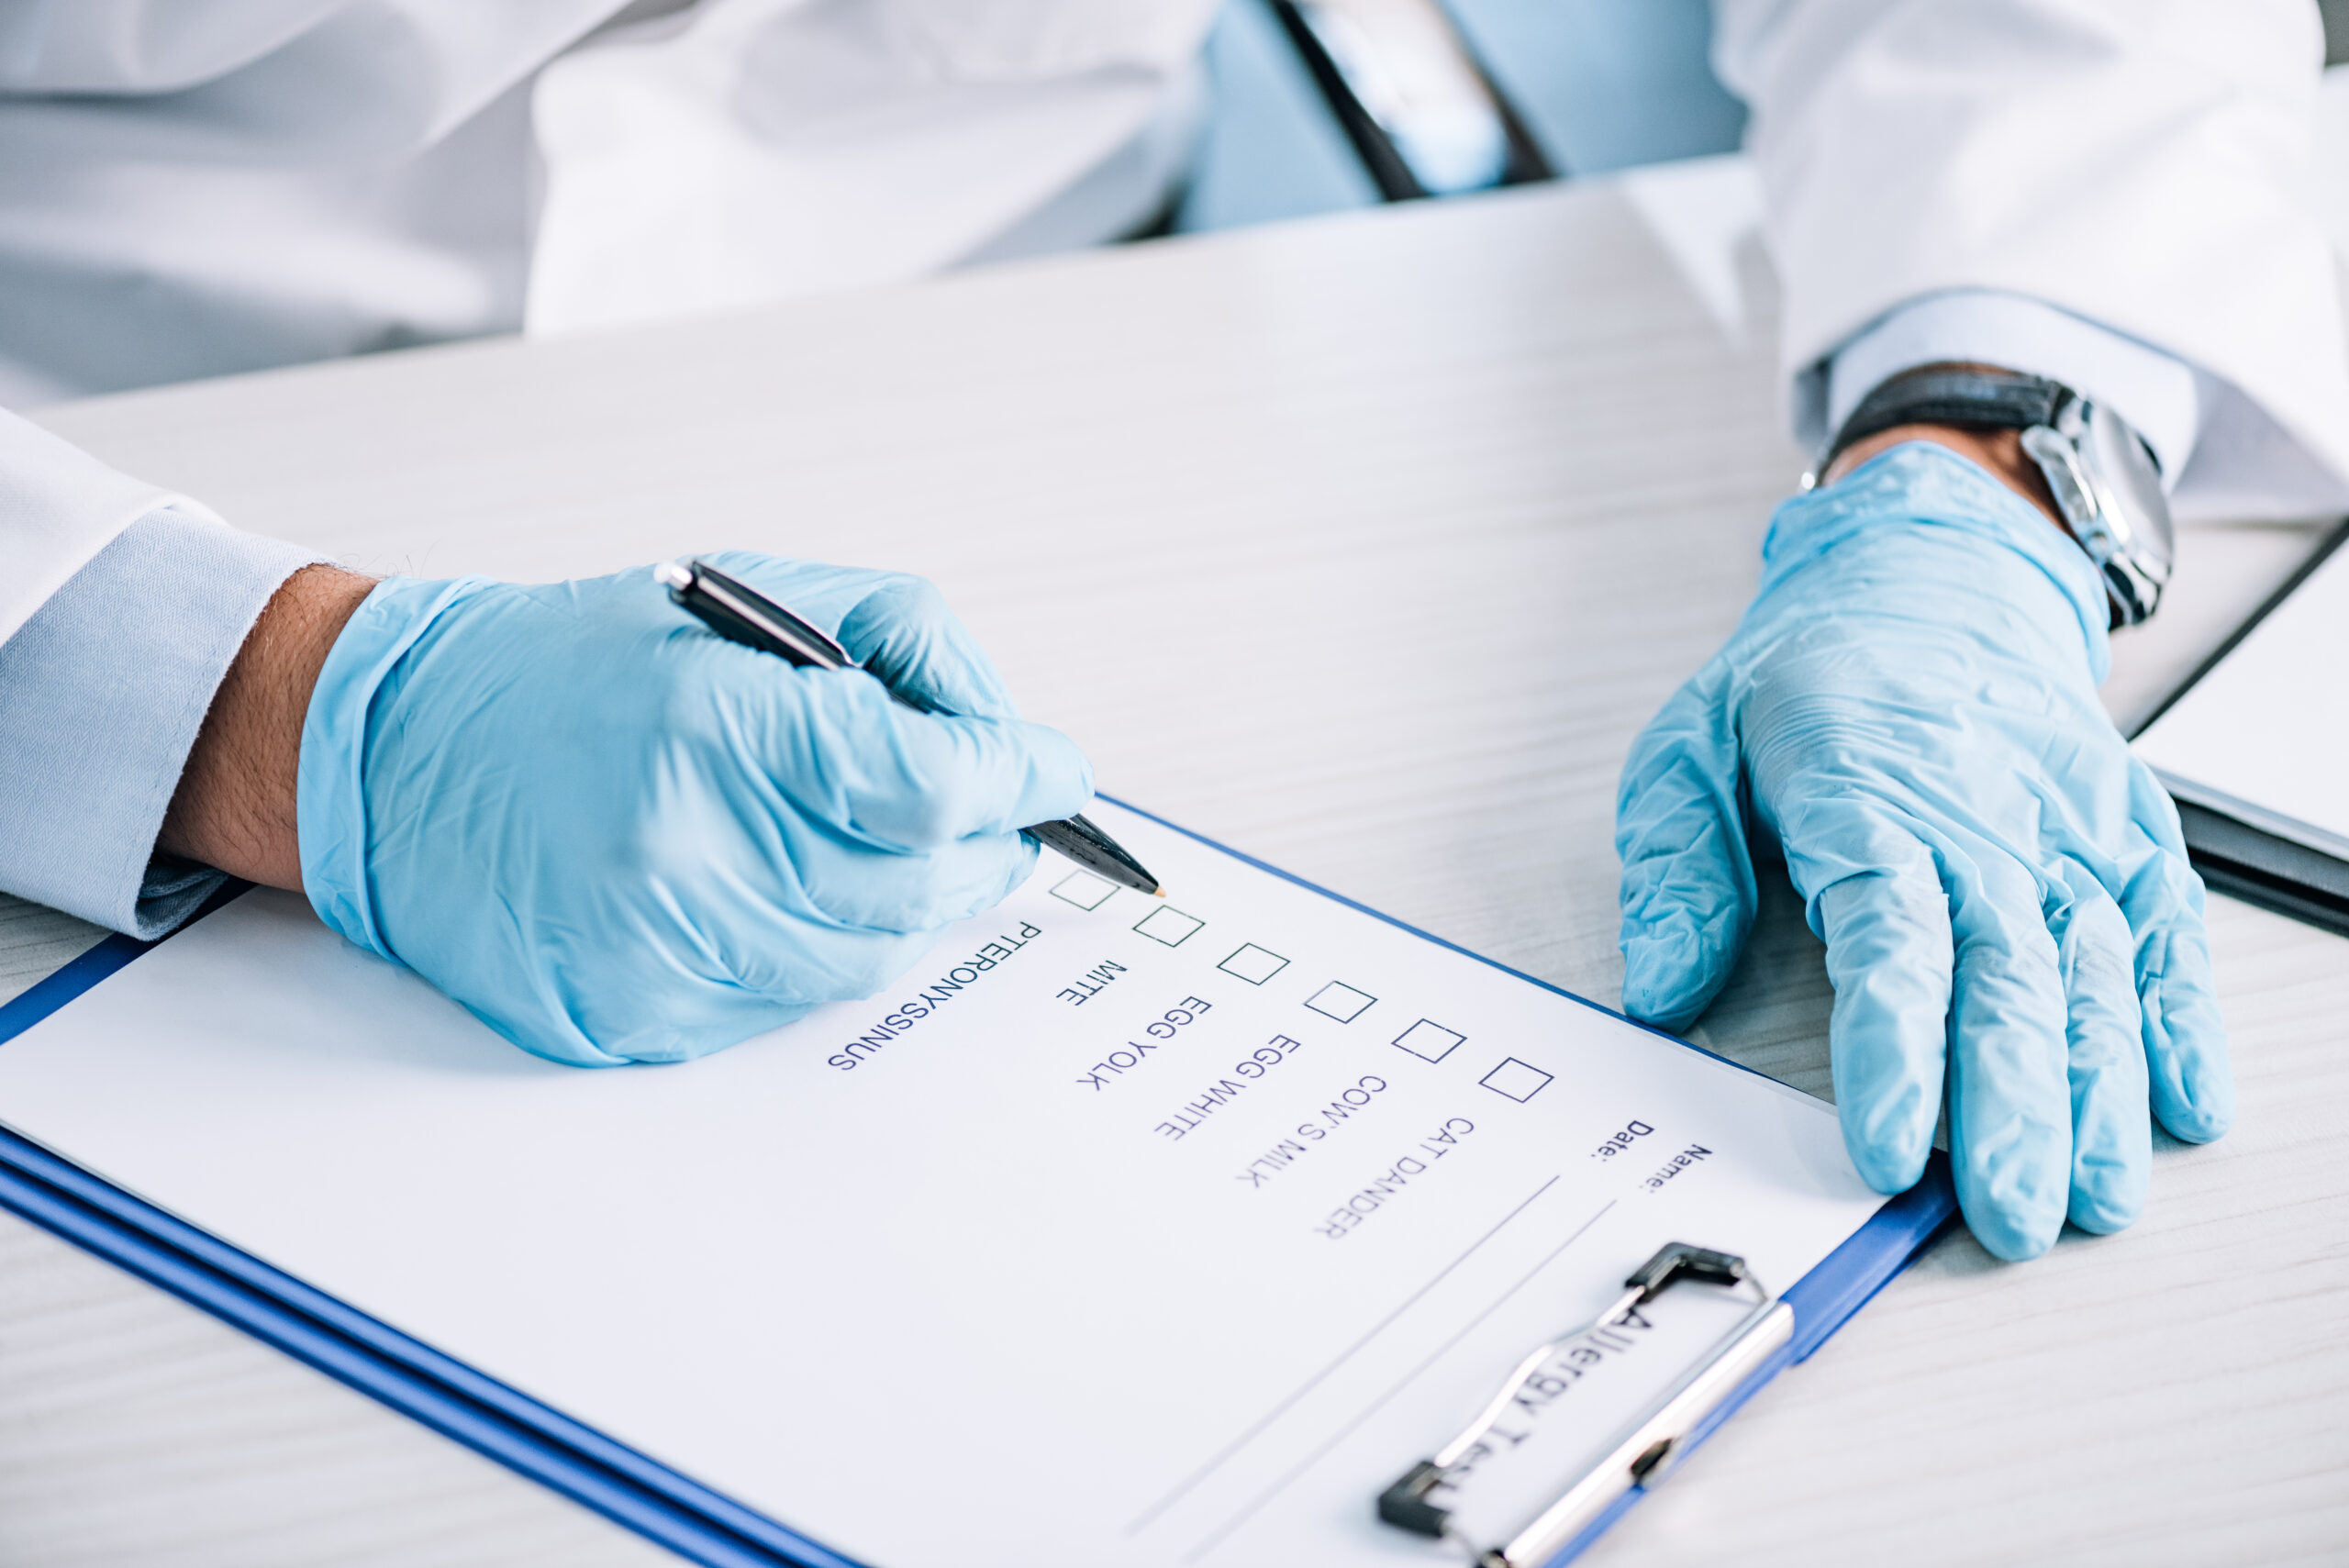 doctors evaluate patients' conditions using a questionnaire checklist